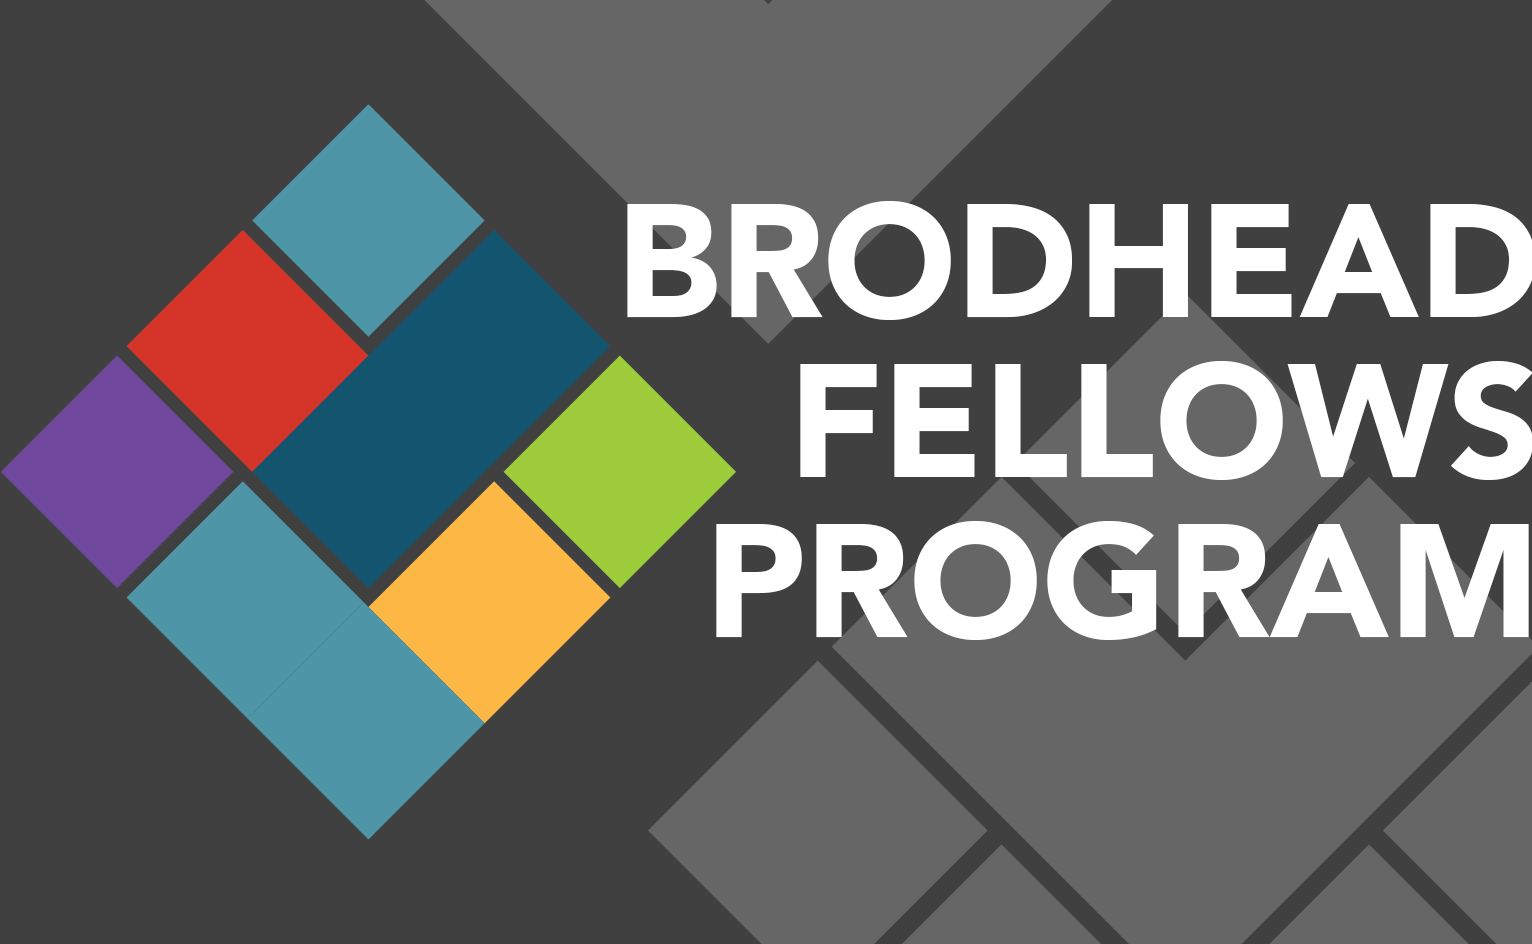 brodhead fellows program